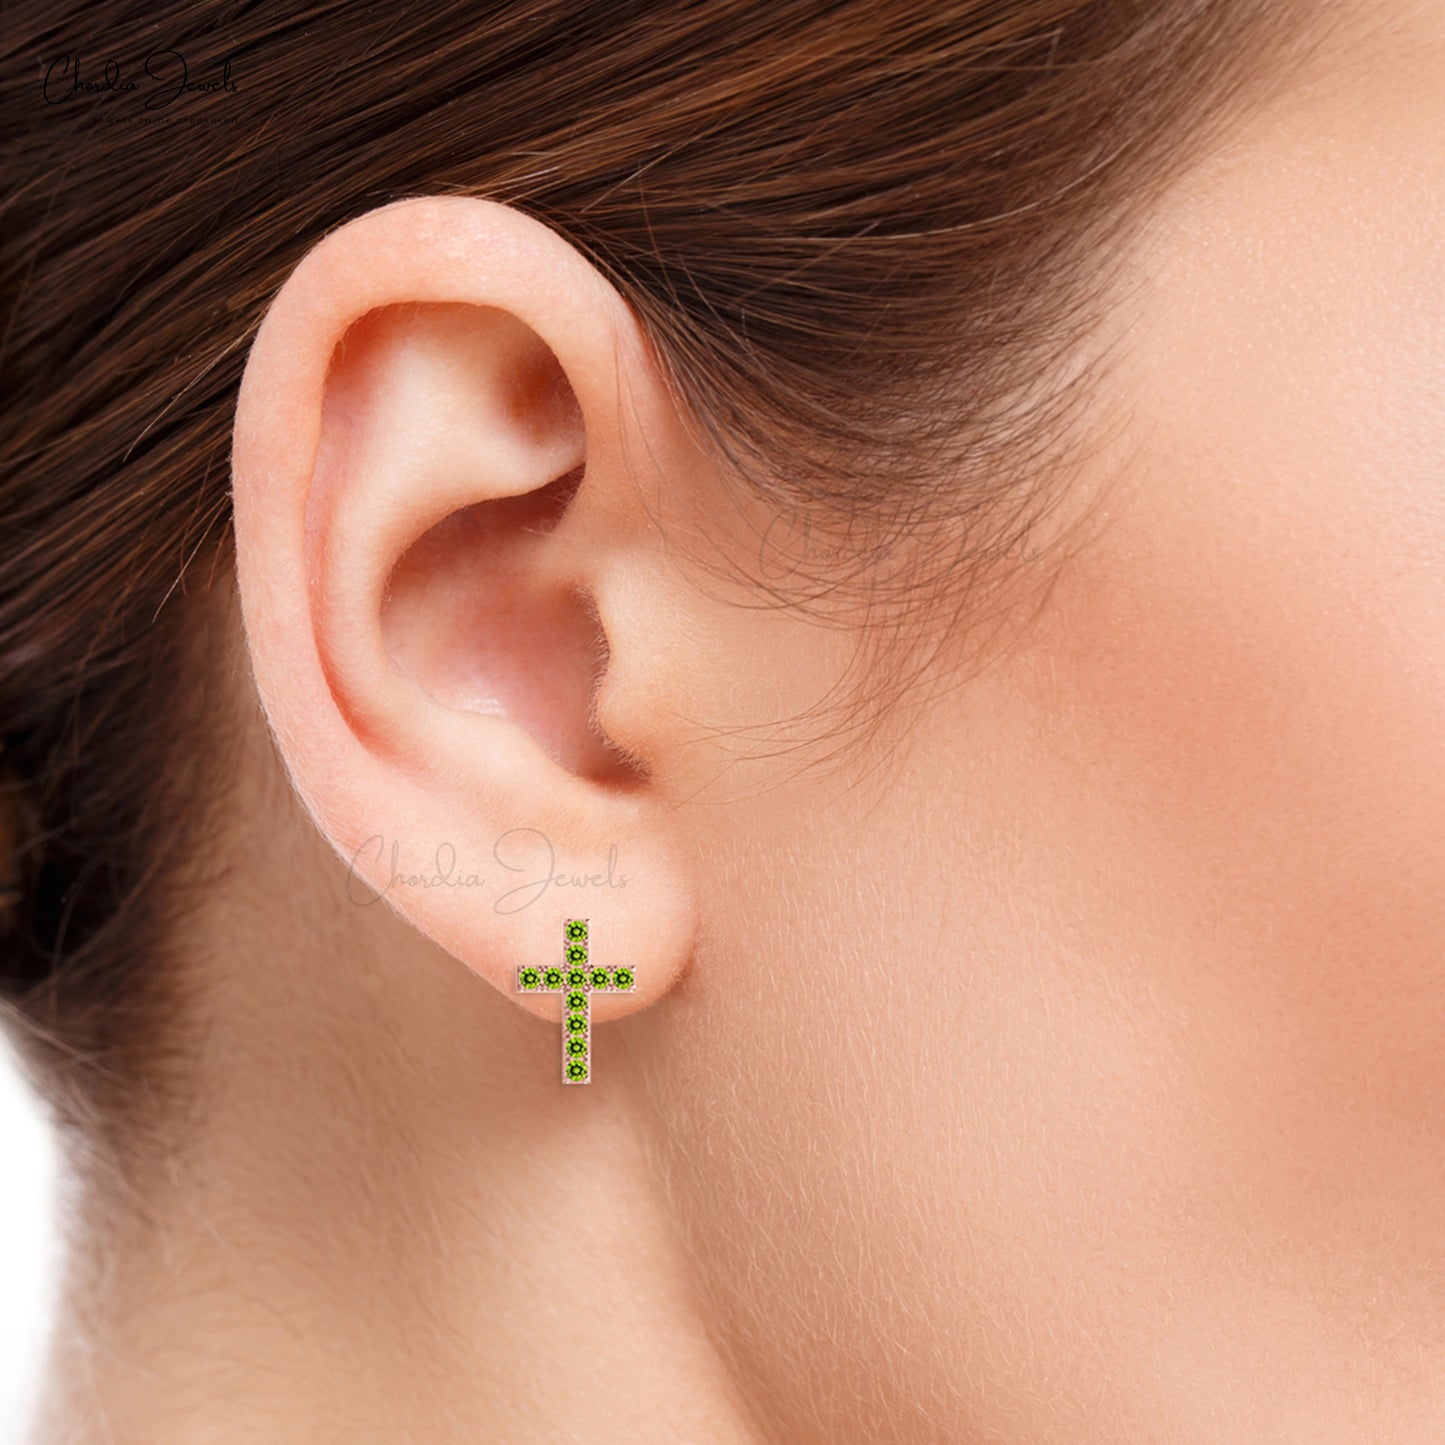 Minimalist Earrings Mini Cross Shaped August Birthstone Natural Green Peridot Stud Earrings Pure 14k Gold Religious Studs Dainty Jewelry For Gift